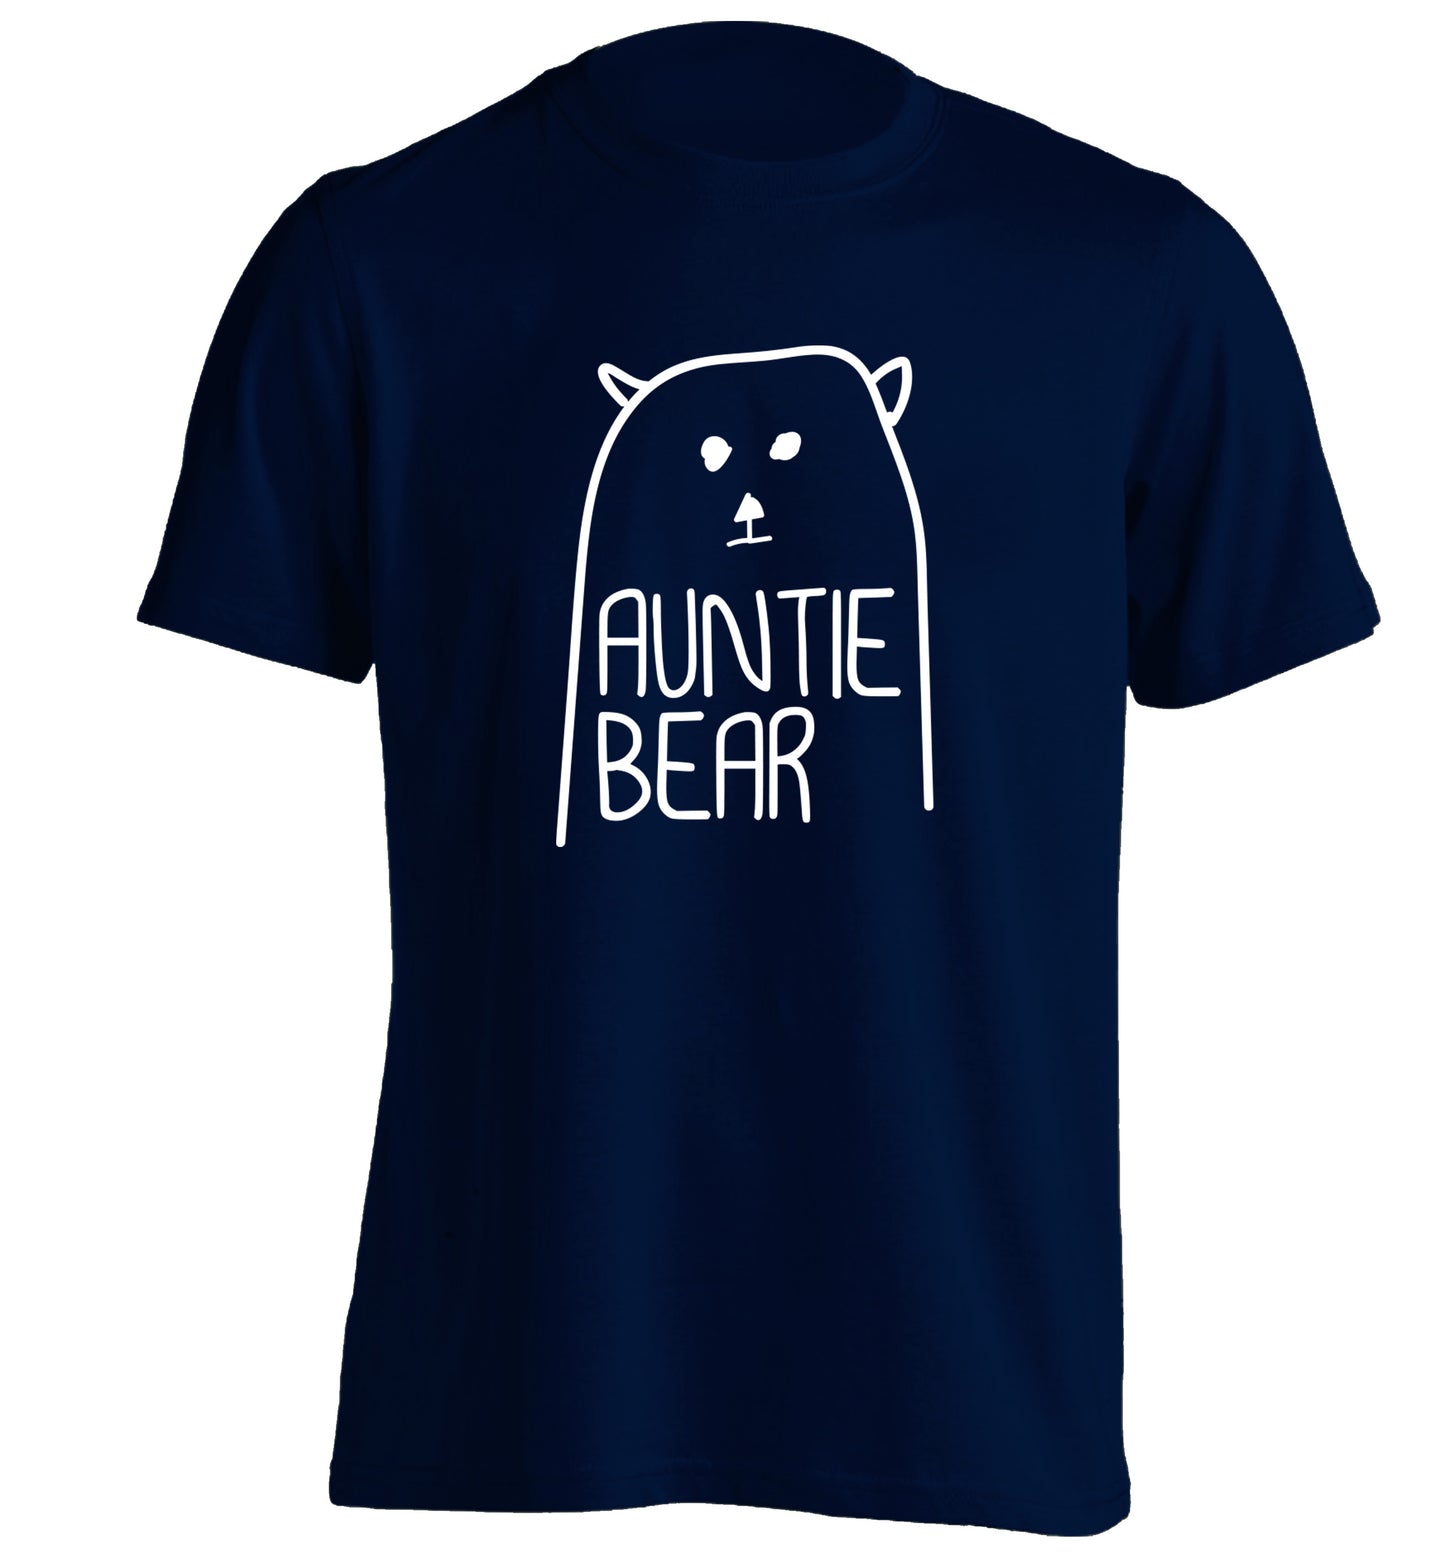 Auntie bear adults unisex navy Tshirt 2XL